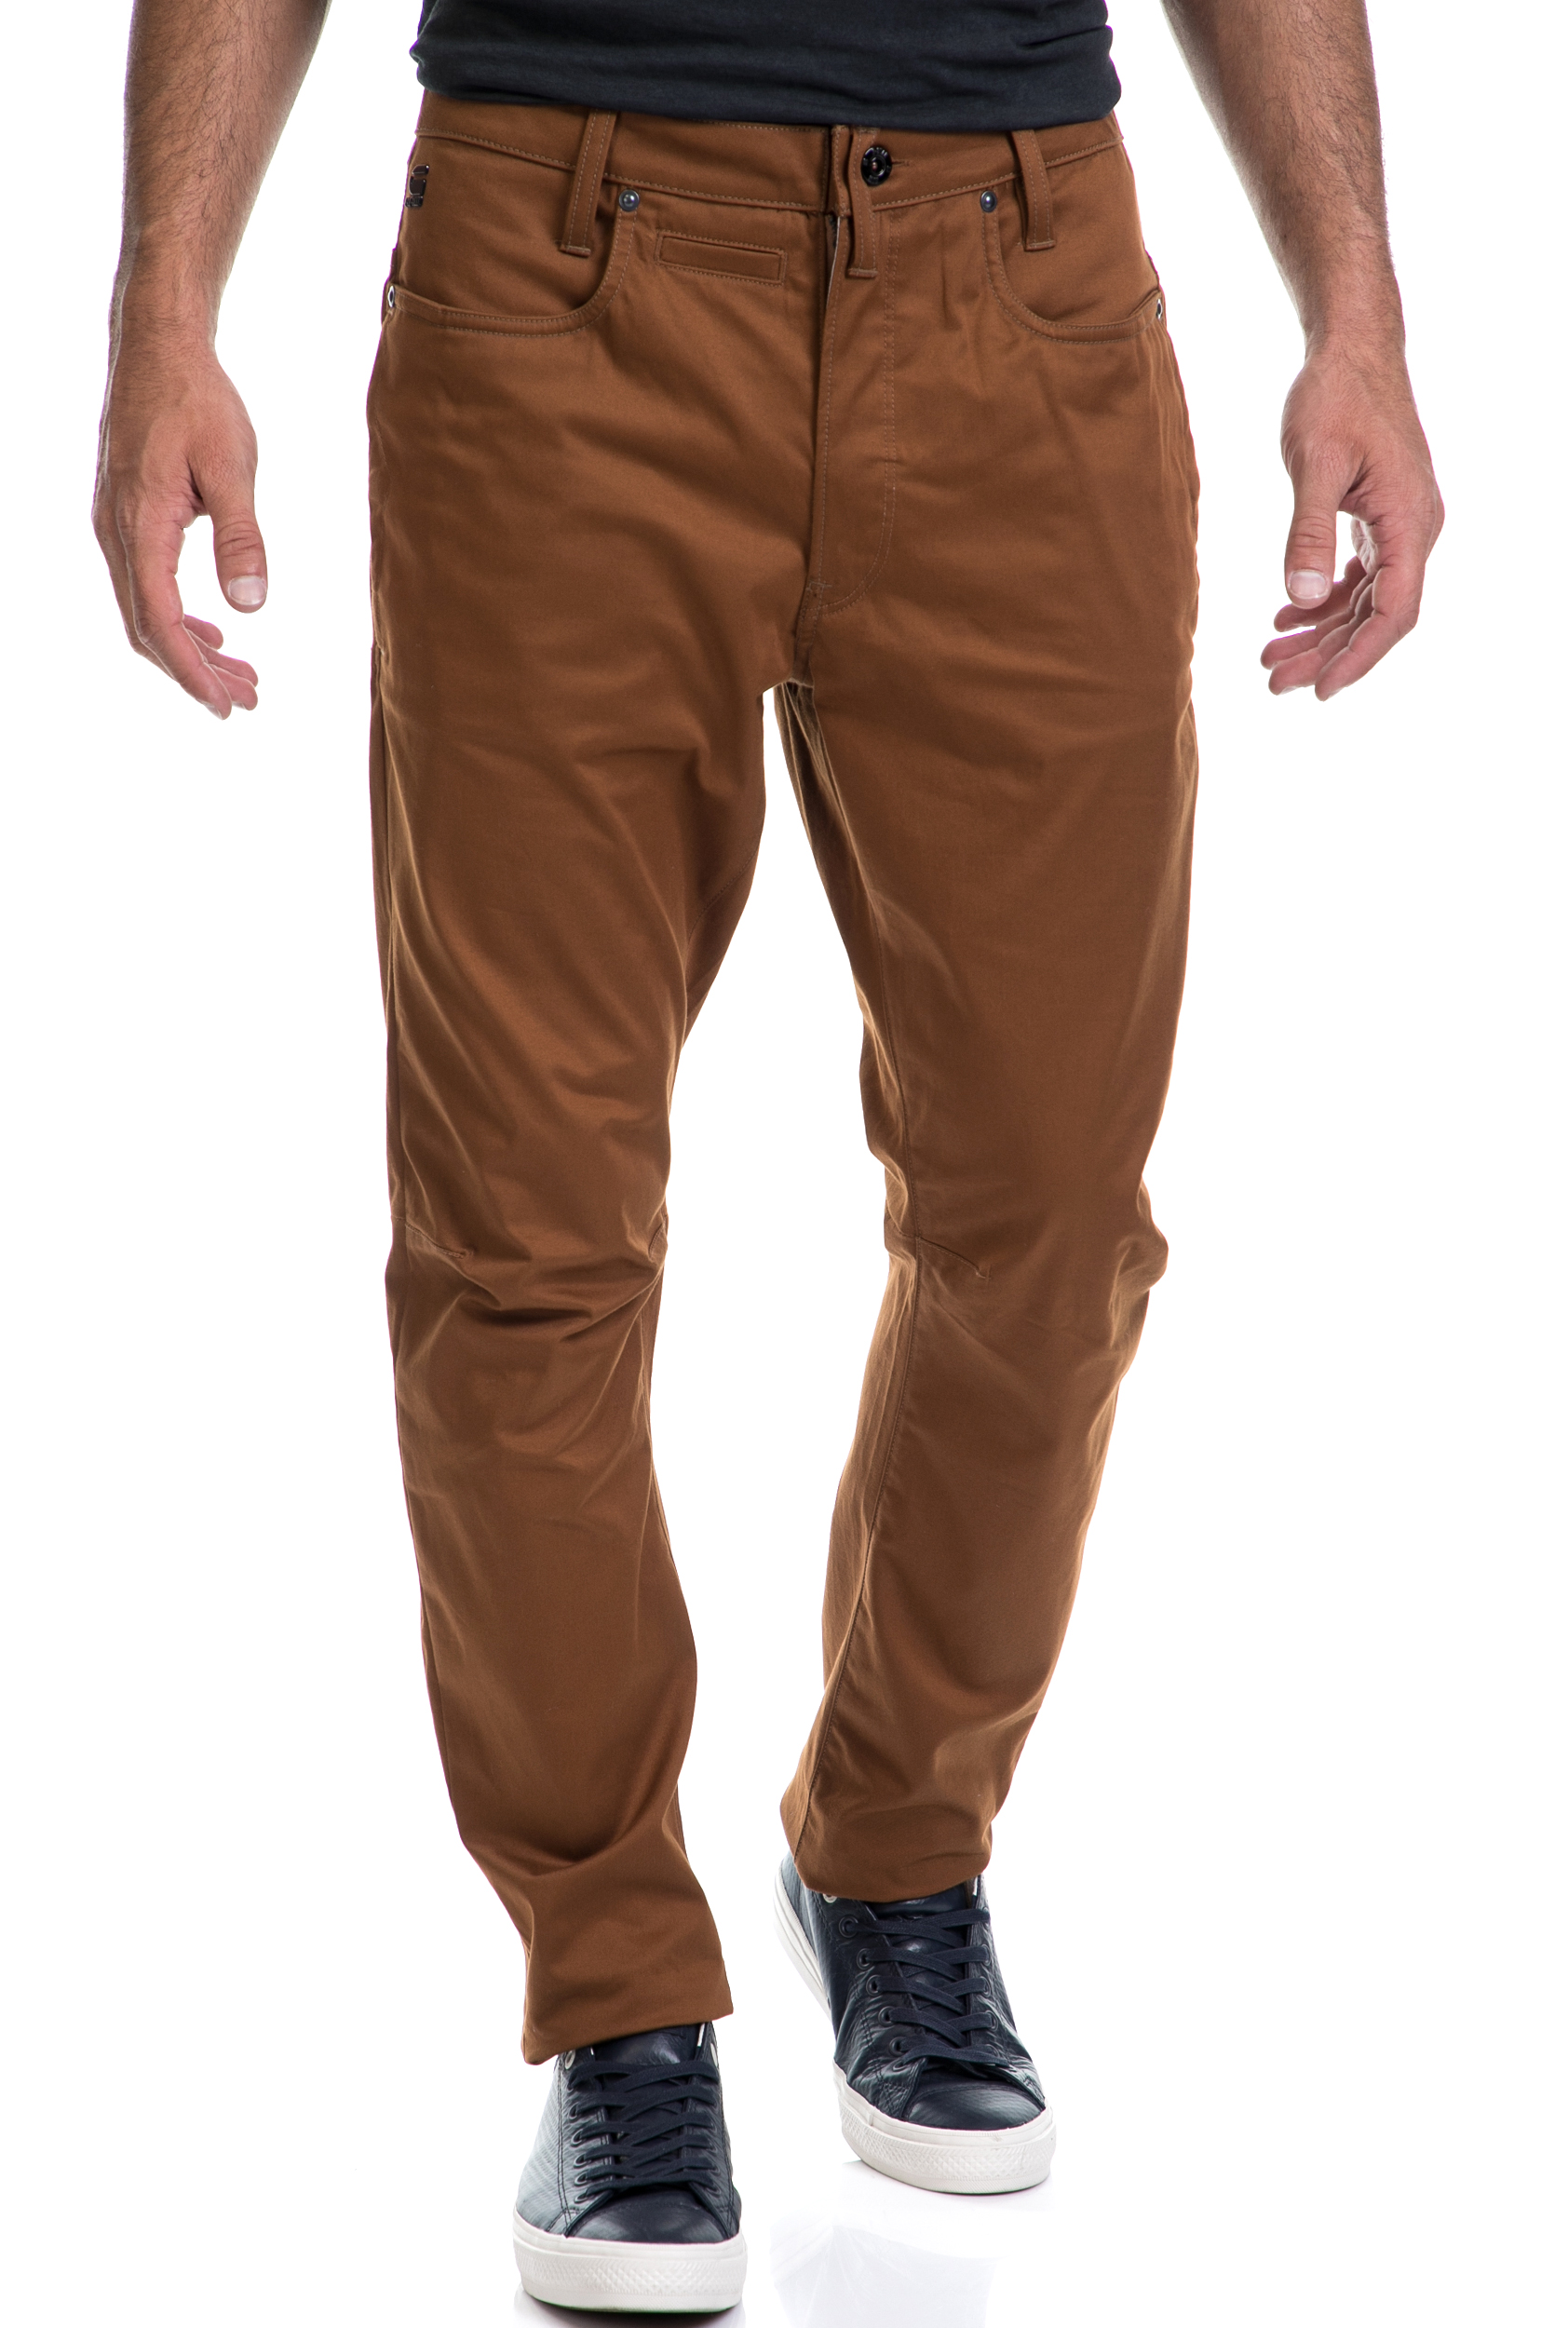 G-STAR RAW - Ανδρικό παντελόνι D-Staq 3D Tapered G-STAR RAW καφέ Ανδρικά/Ρούχα/Παντελόνια/Ισια Γραμμή